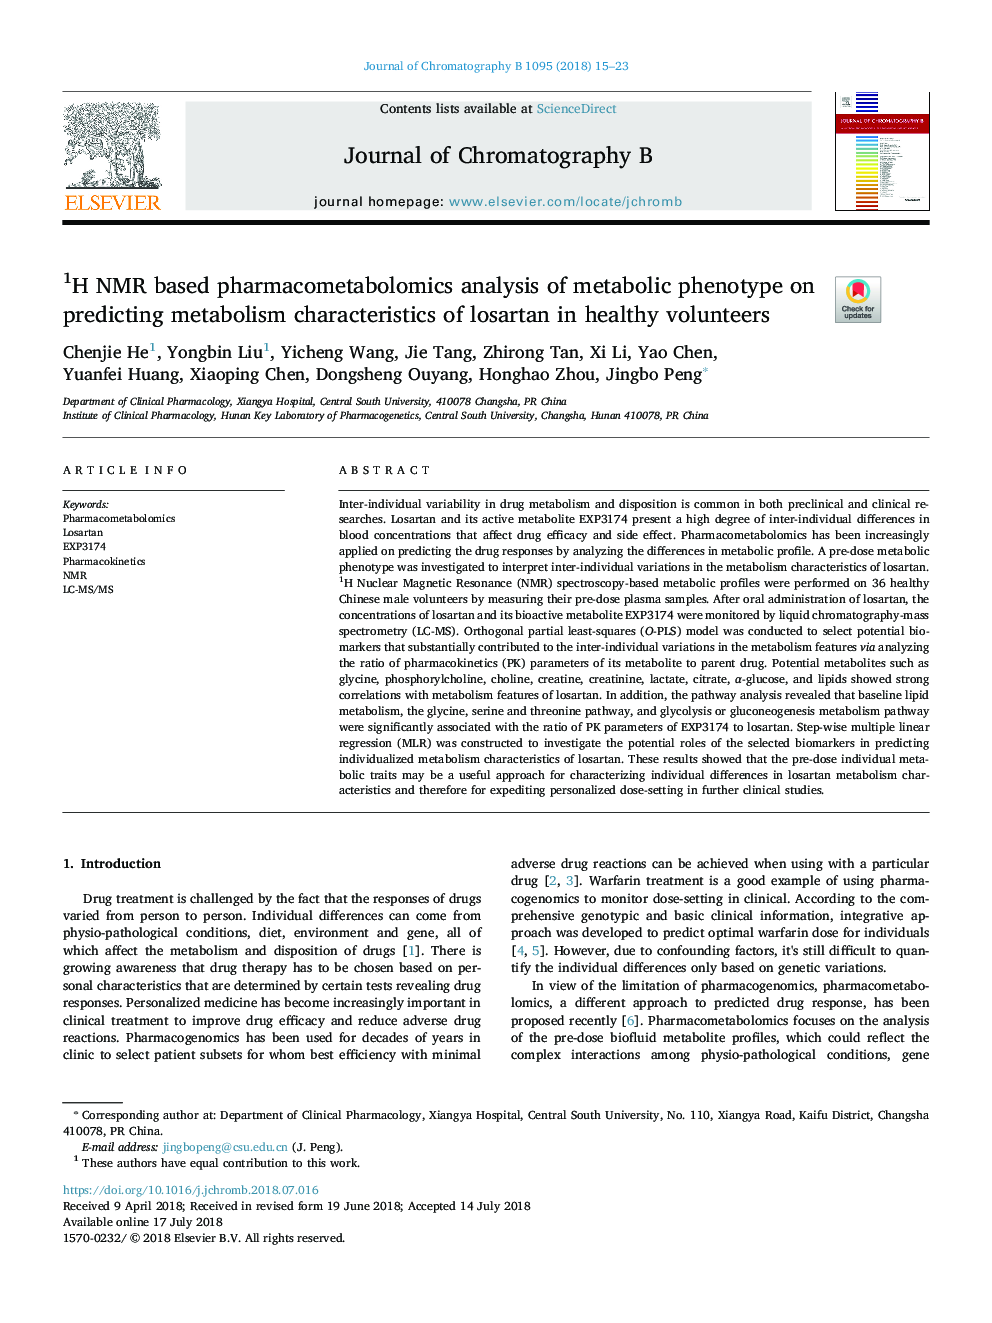 1H NMR based pharmacometabolomics analysis of metabolic phenotype on predicting metabolism characteristics of losartan in healthy volunteers